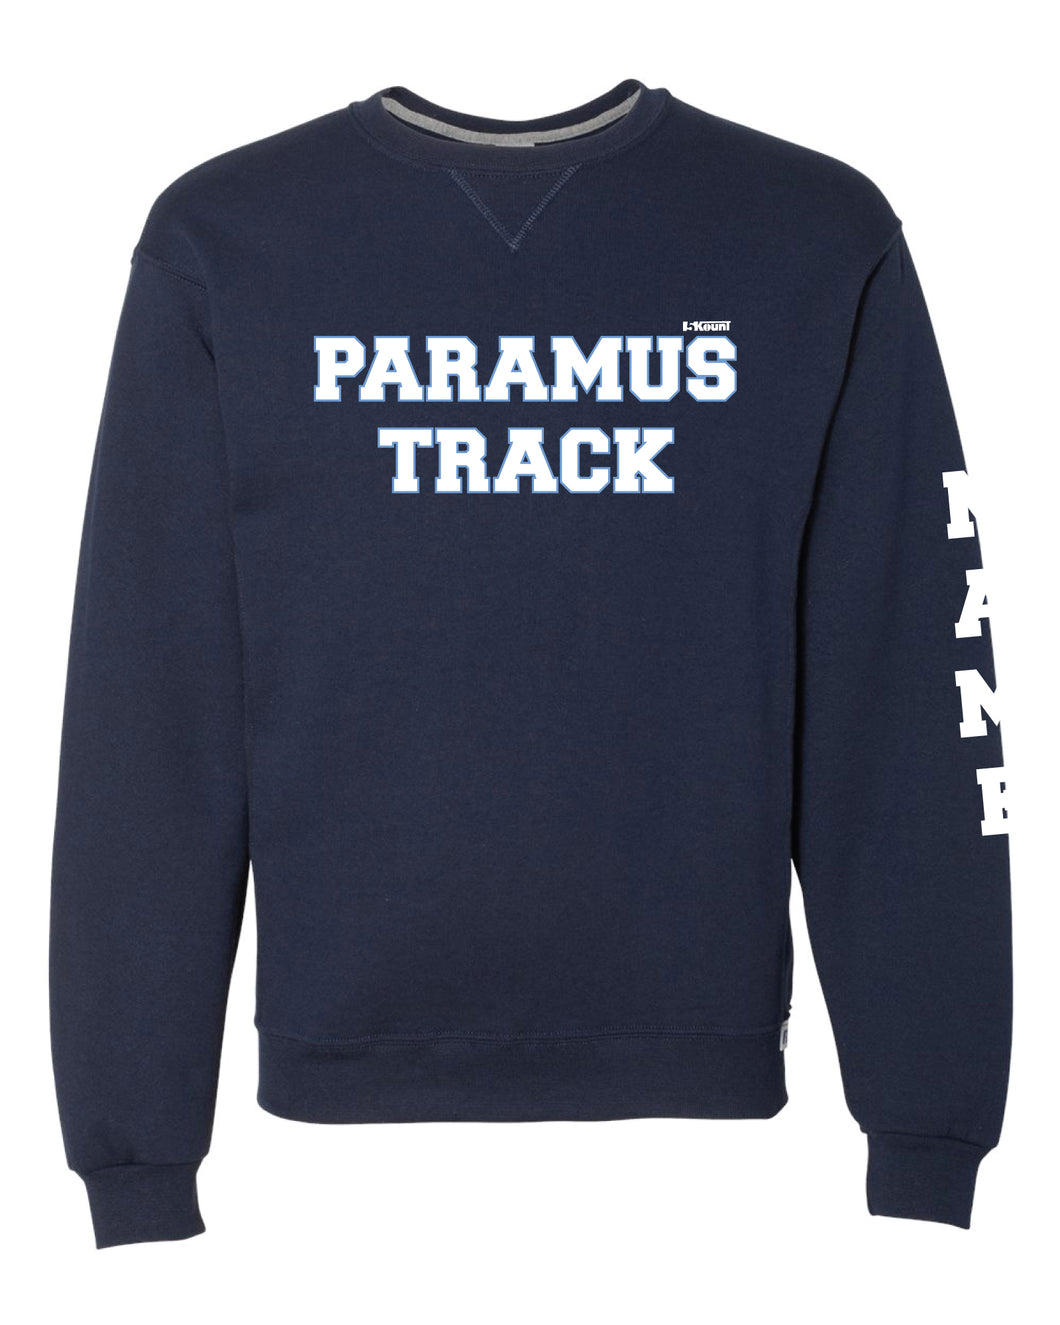 Paramus Track Russell Athletic Cotton Crewneck Sweatshirt - Navy - 5KounT2018